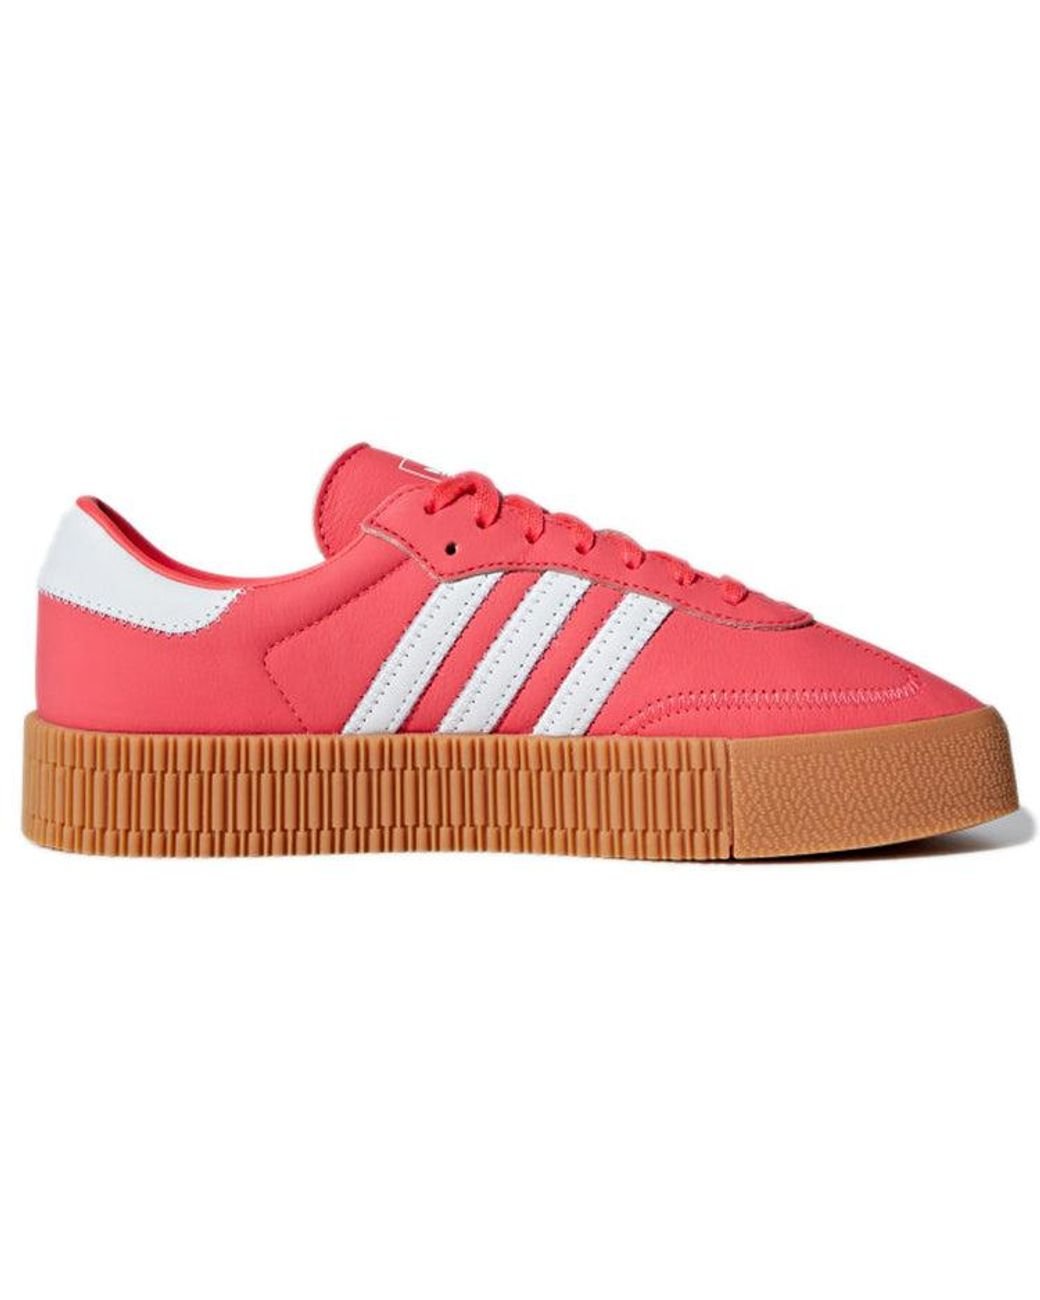 adidas Originals Sambarose Pink/red | Lyst